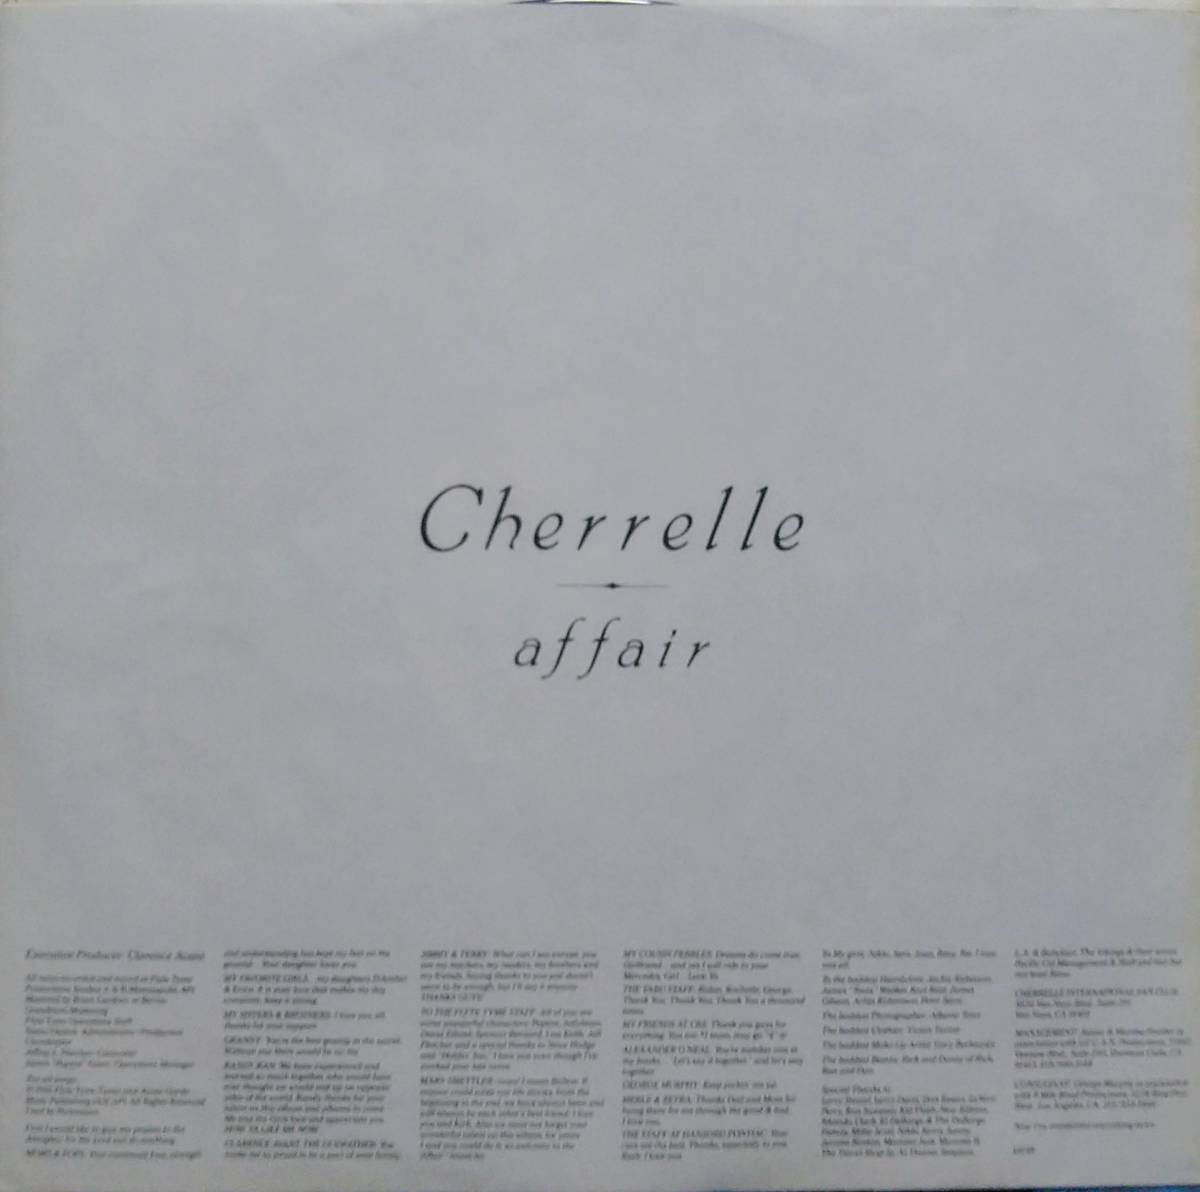 【LP R&B Soul】Cherrelle「Affair」オリジナル US盤_ピクチャースリーブ